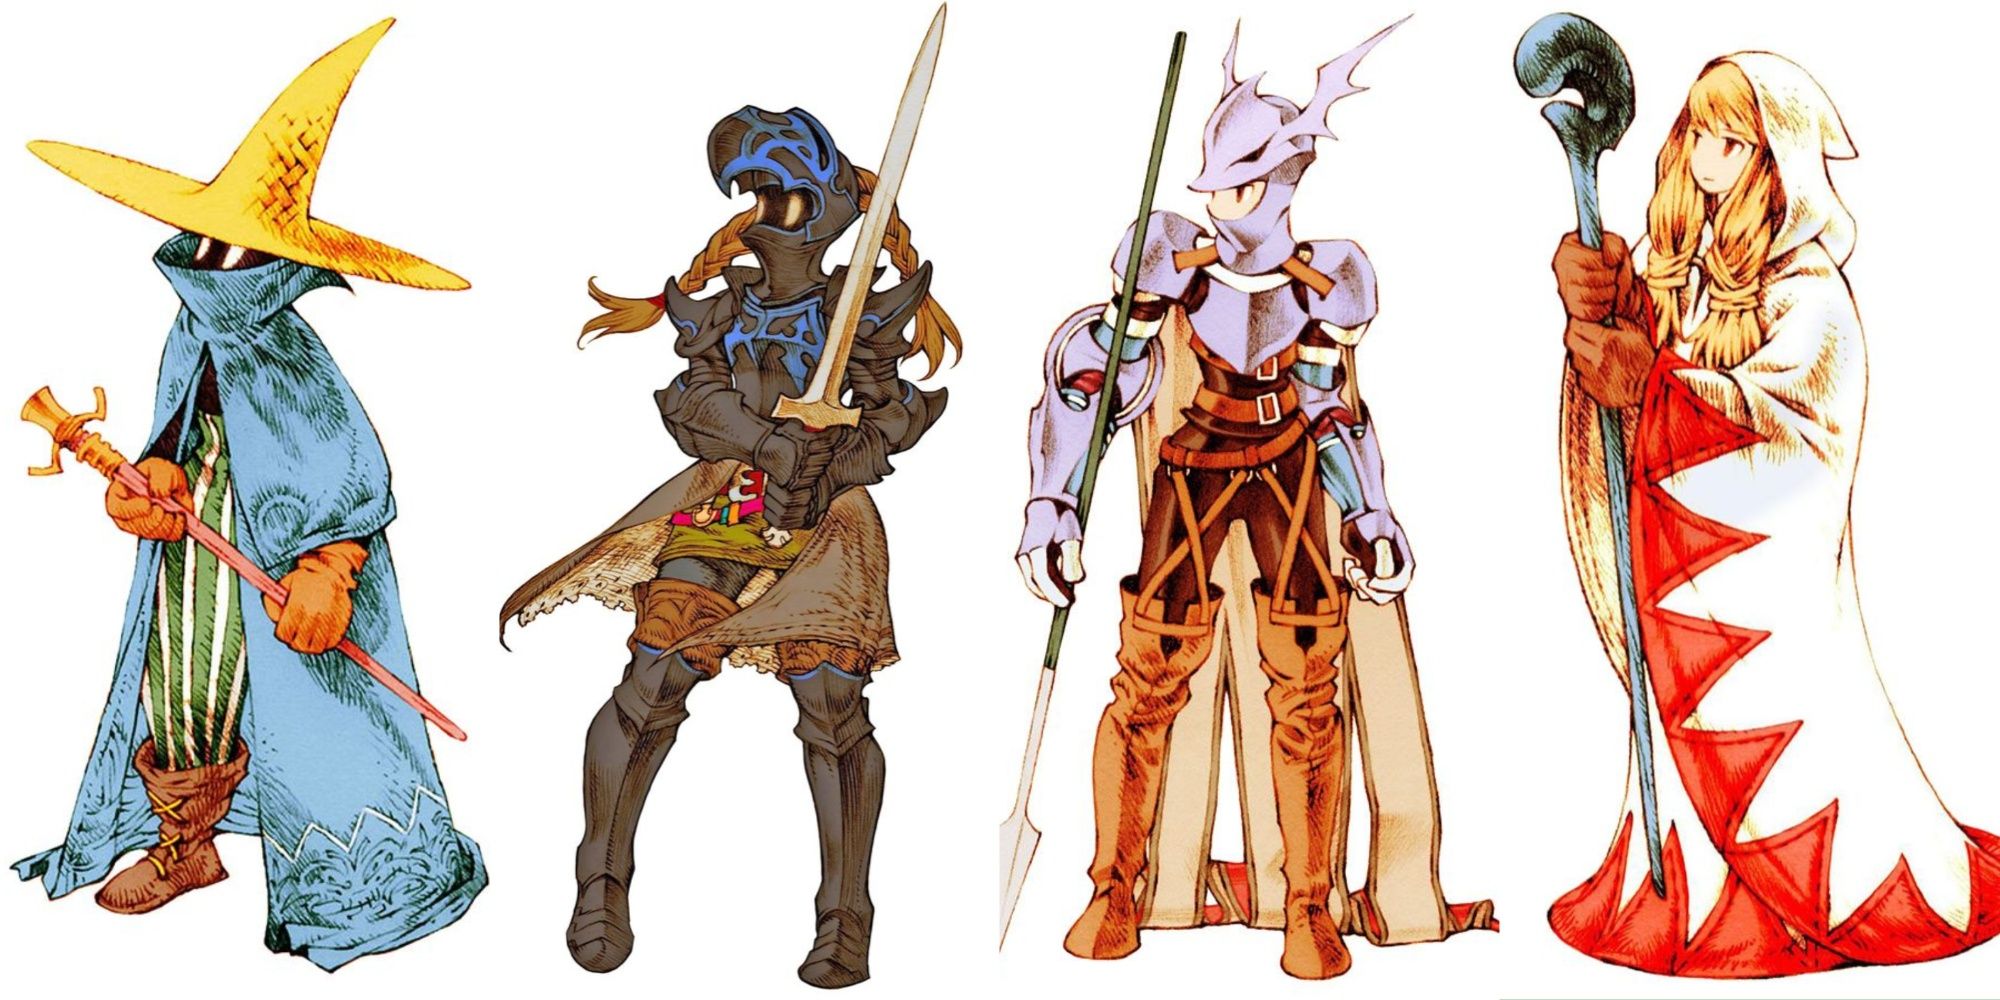 Black Mage, Dark Knight, Dragoon, and White Mage from Final Fantasy Tactics